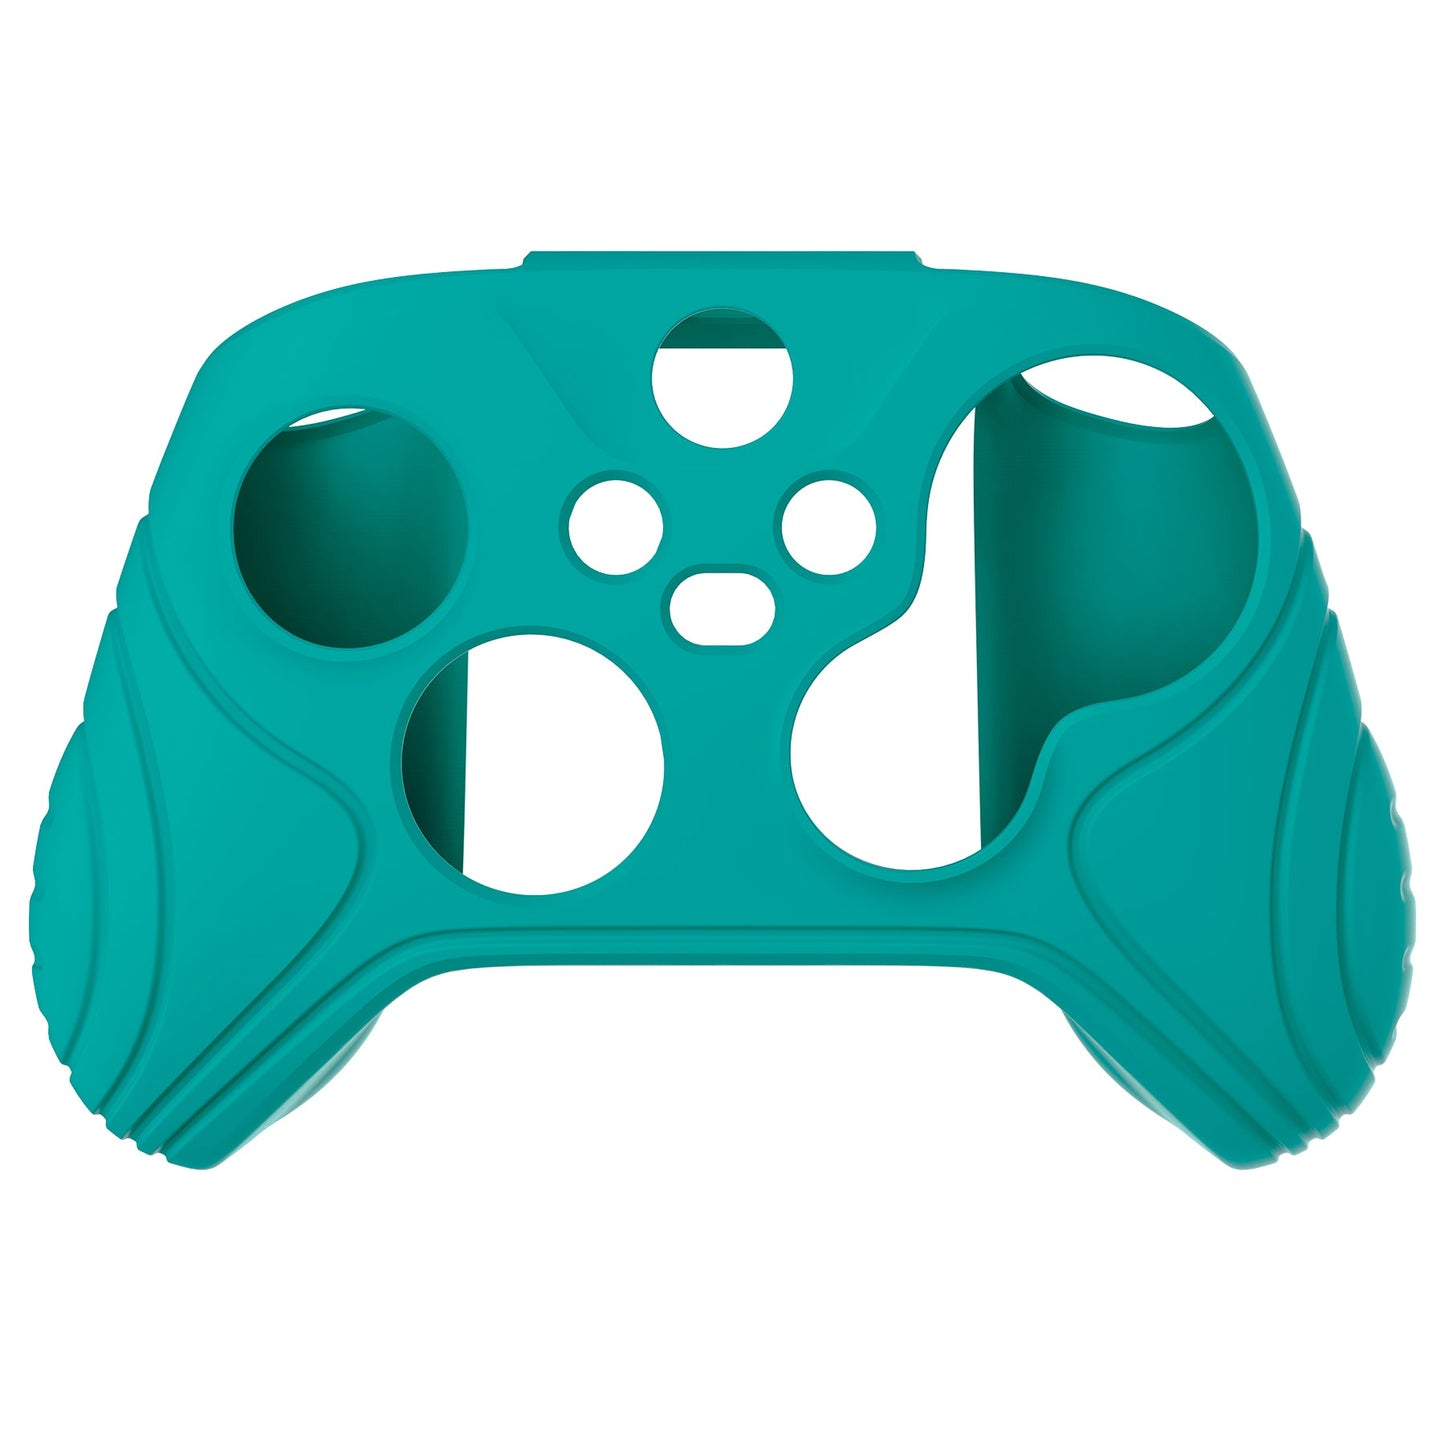 PlayVital Samurai Edition Aqua Green Anti-slip Controller Grip Silicone Skin, Ergonomic Soft Rubber Protective Case Cover for Xbox Series S/X Controller with Black Thumb Stick Caps - WAX3010 PlayVital